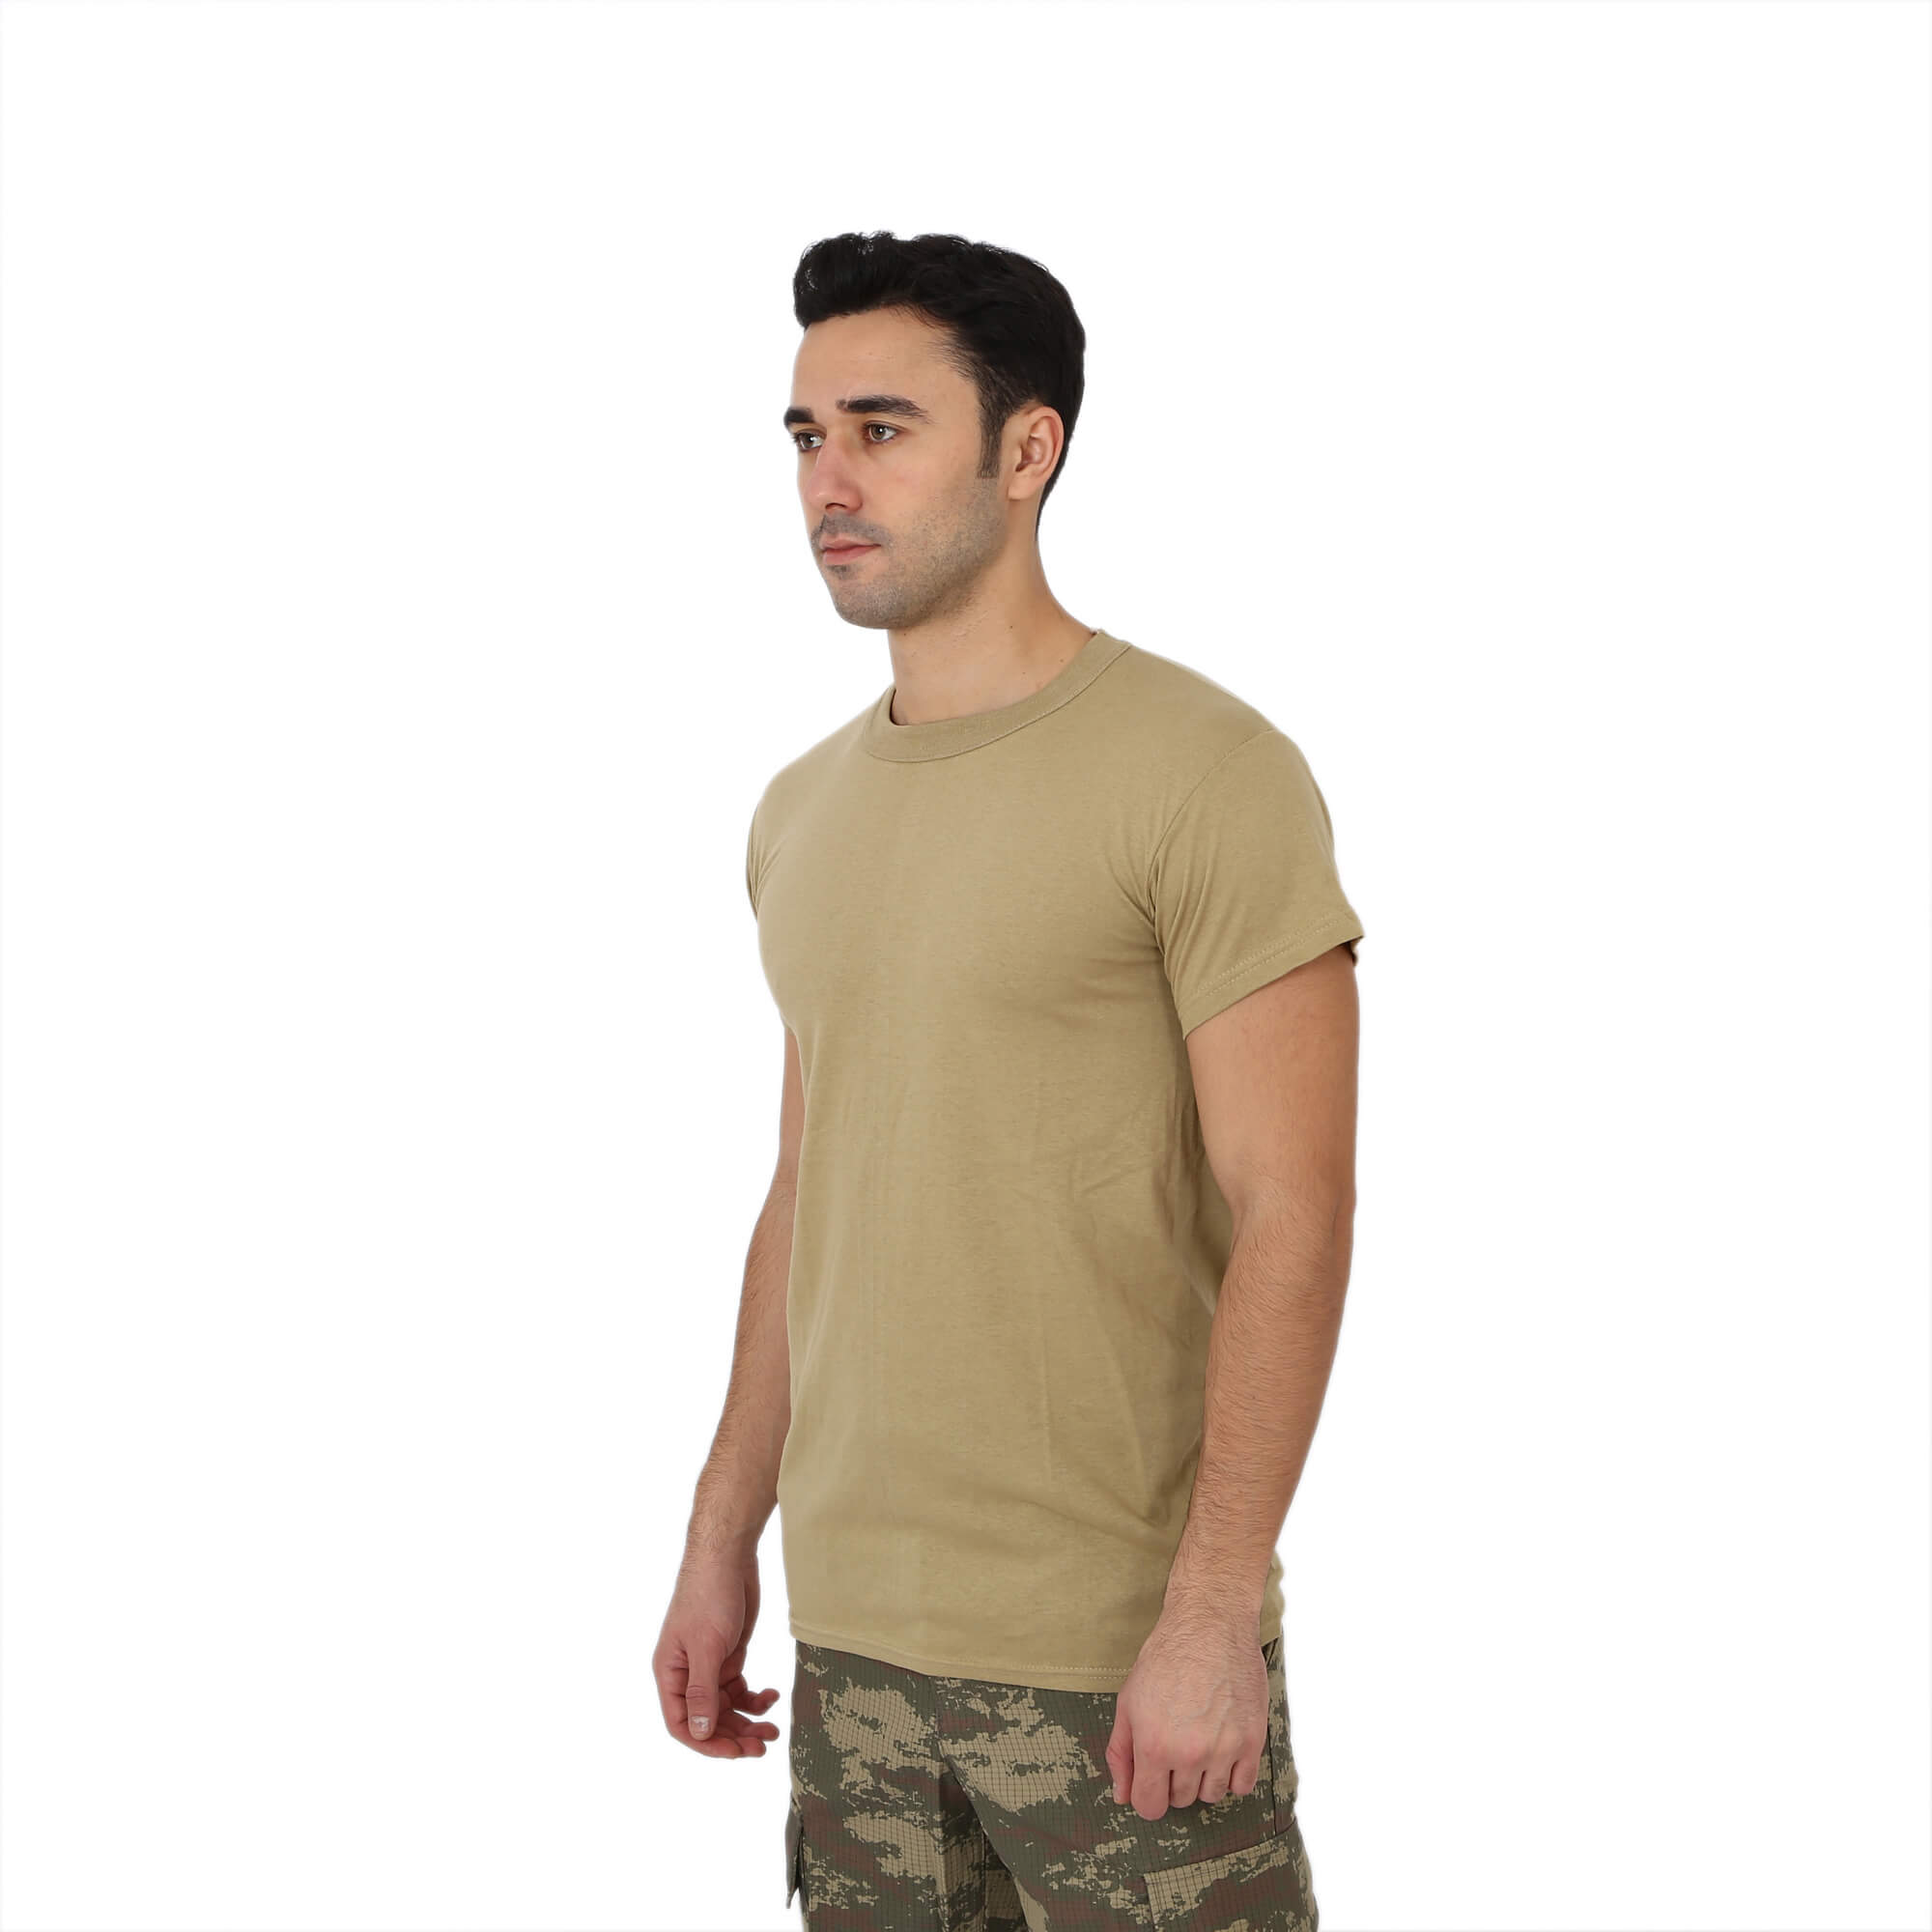 Military Nano Green Short Sleeve Underwear T-Shirt